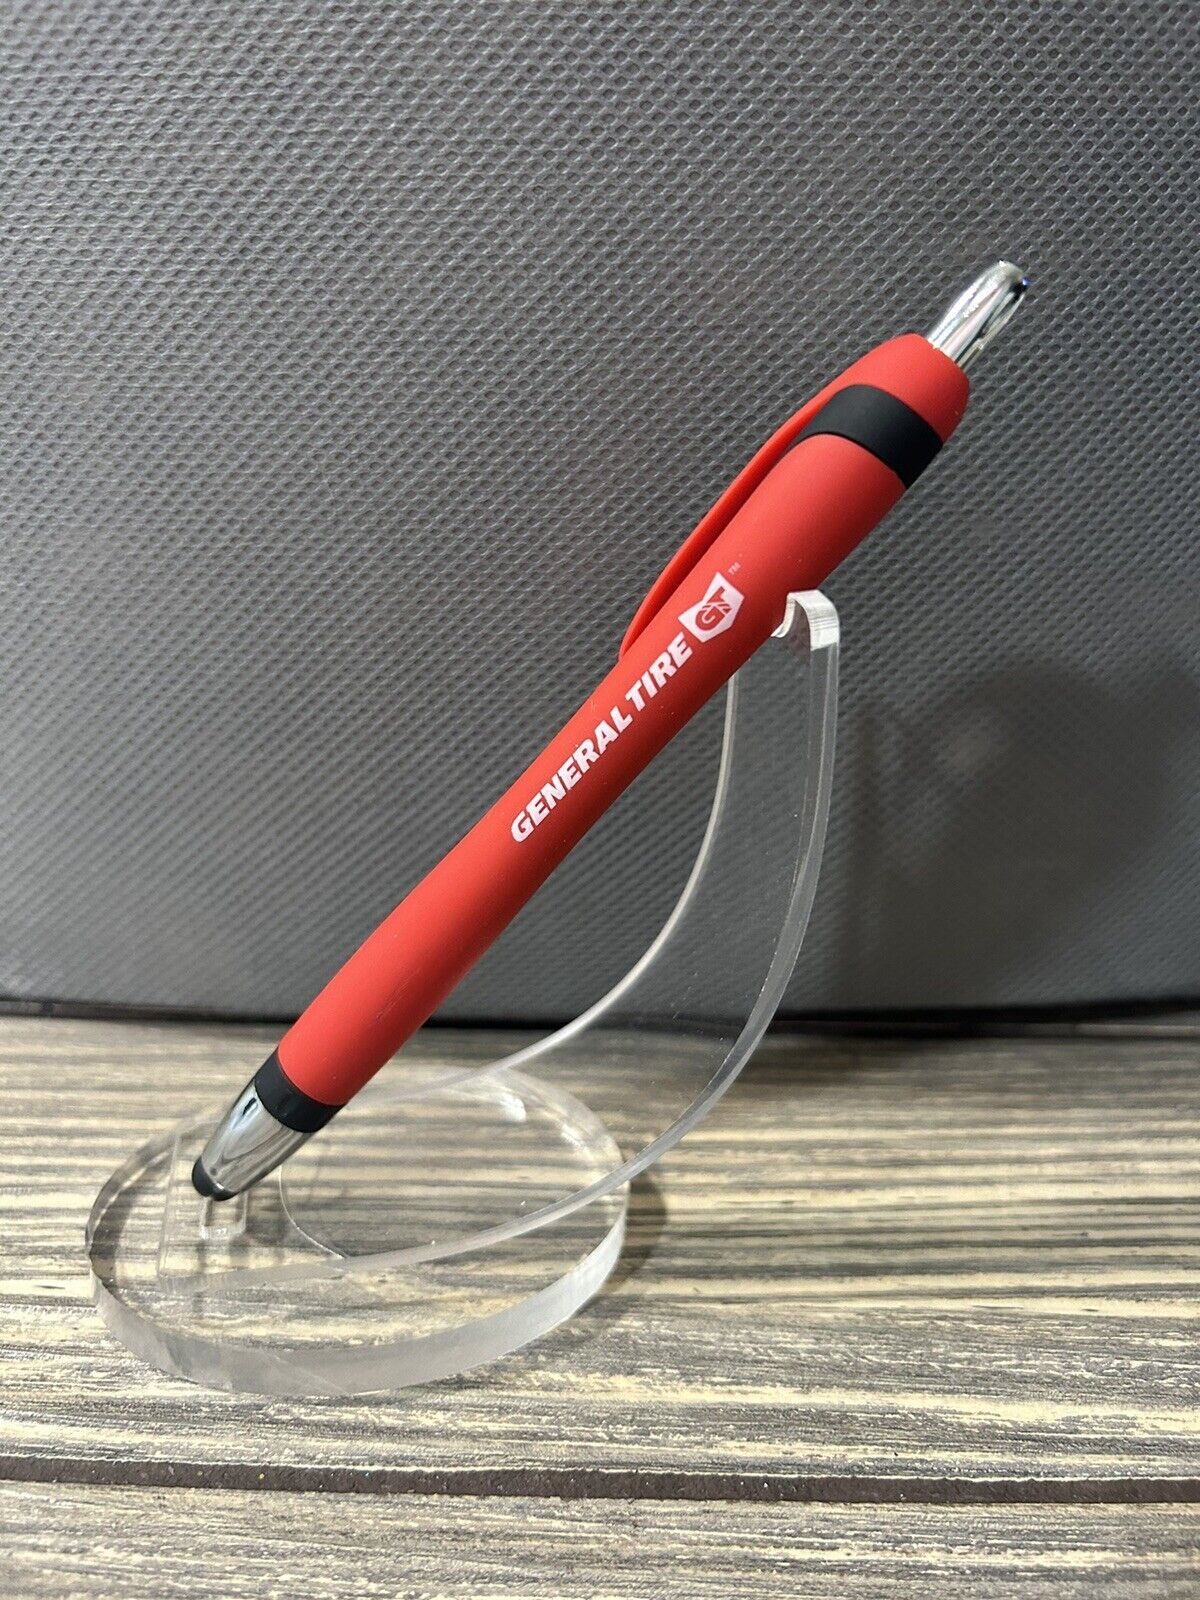 General Tire GT Red Retractable Pen Advertisement E